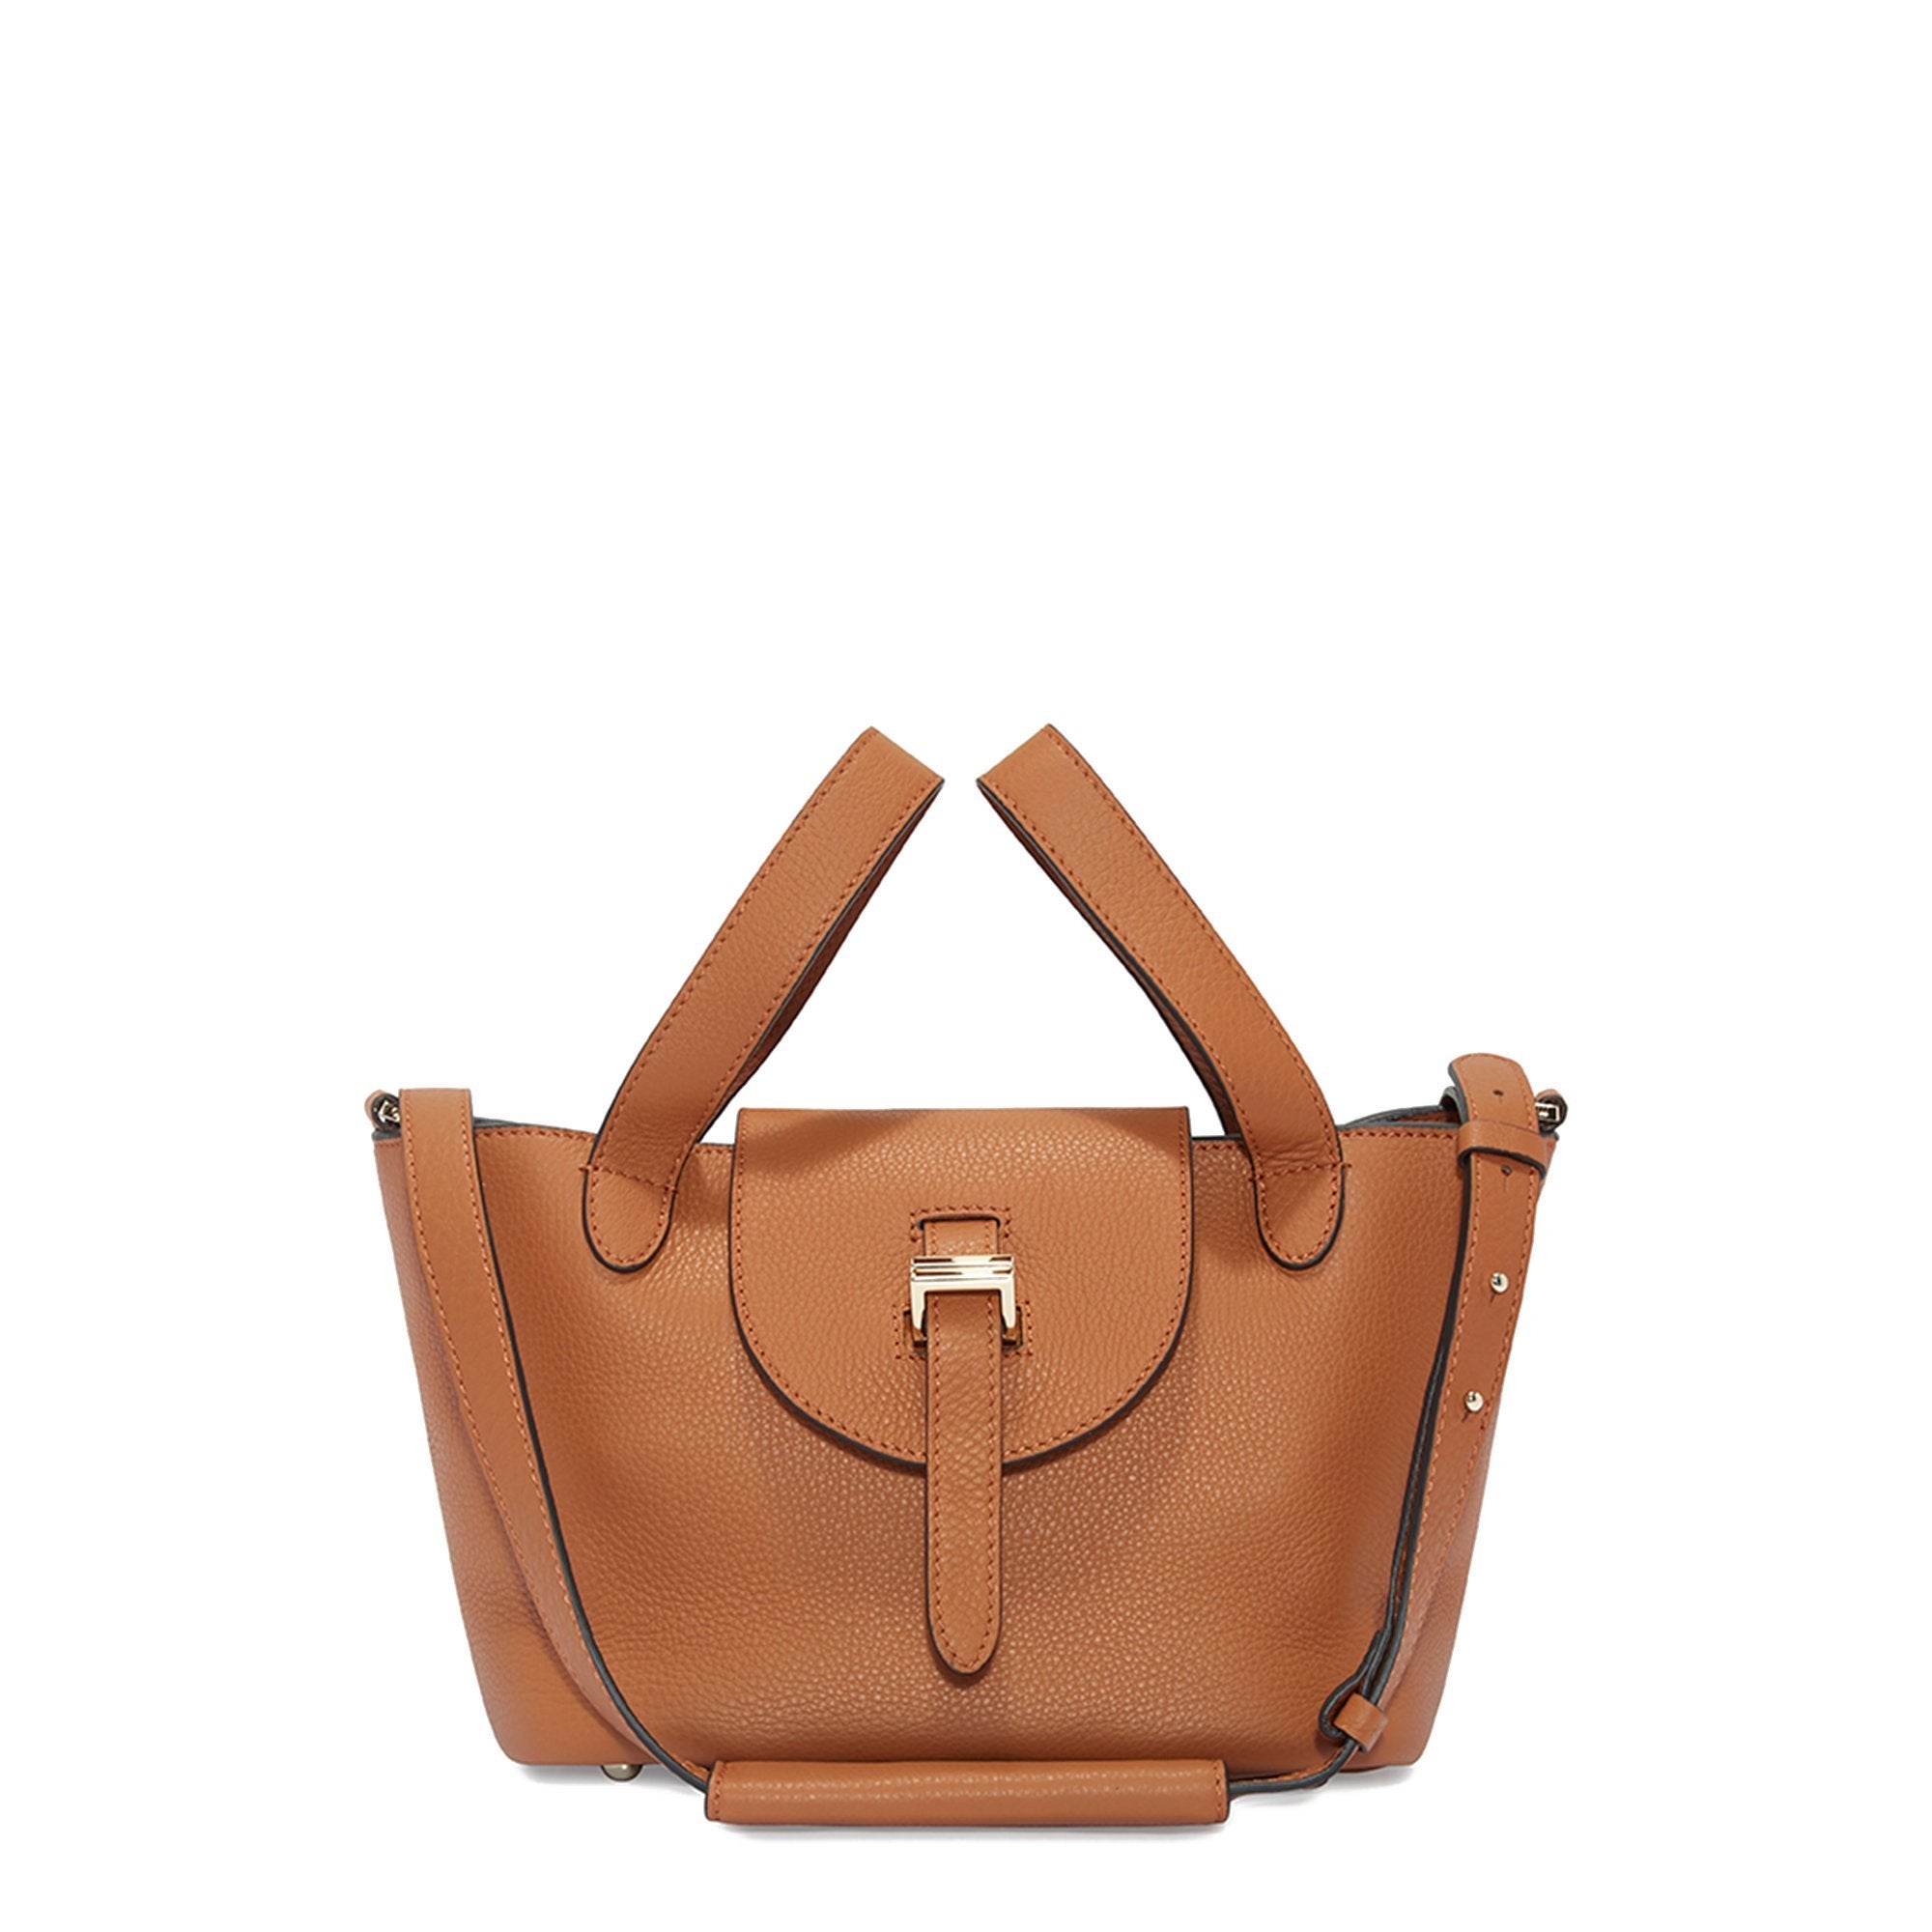 Meli Melo Thela Color Block Small Tan Leather Satchel Ladies Bag